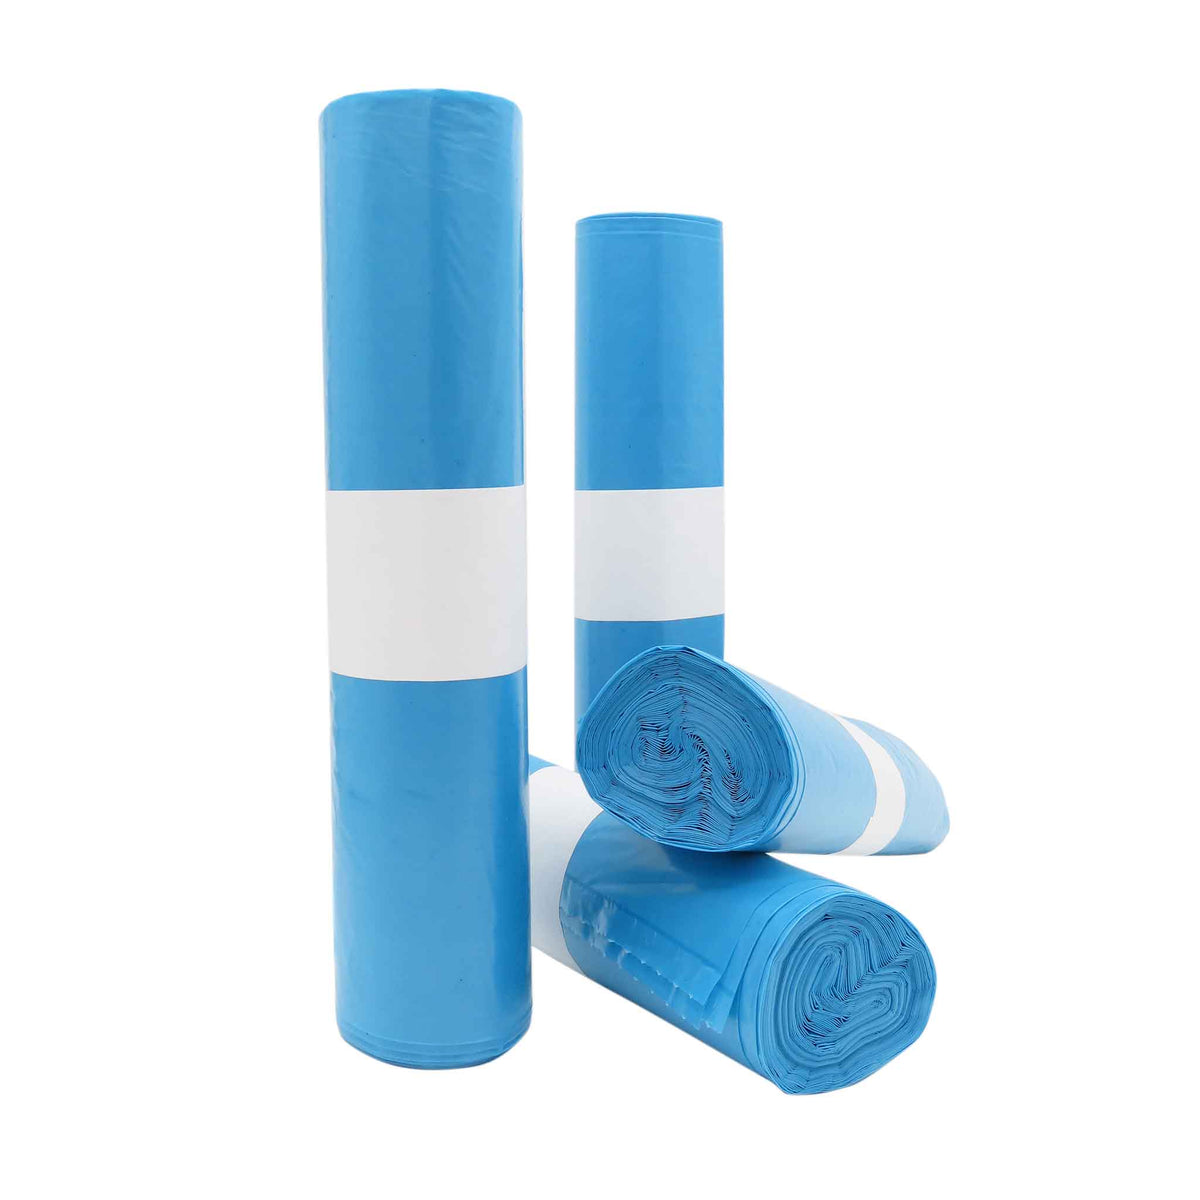 rollo de plastico azul precio - PLASTICOS LUBNAI SAC